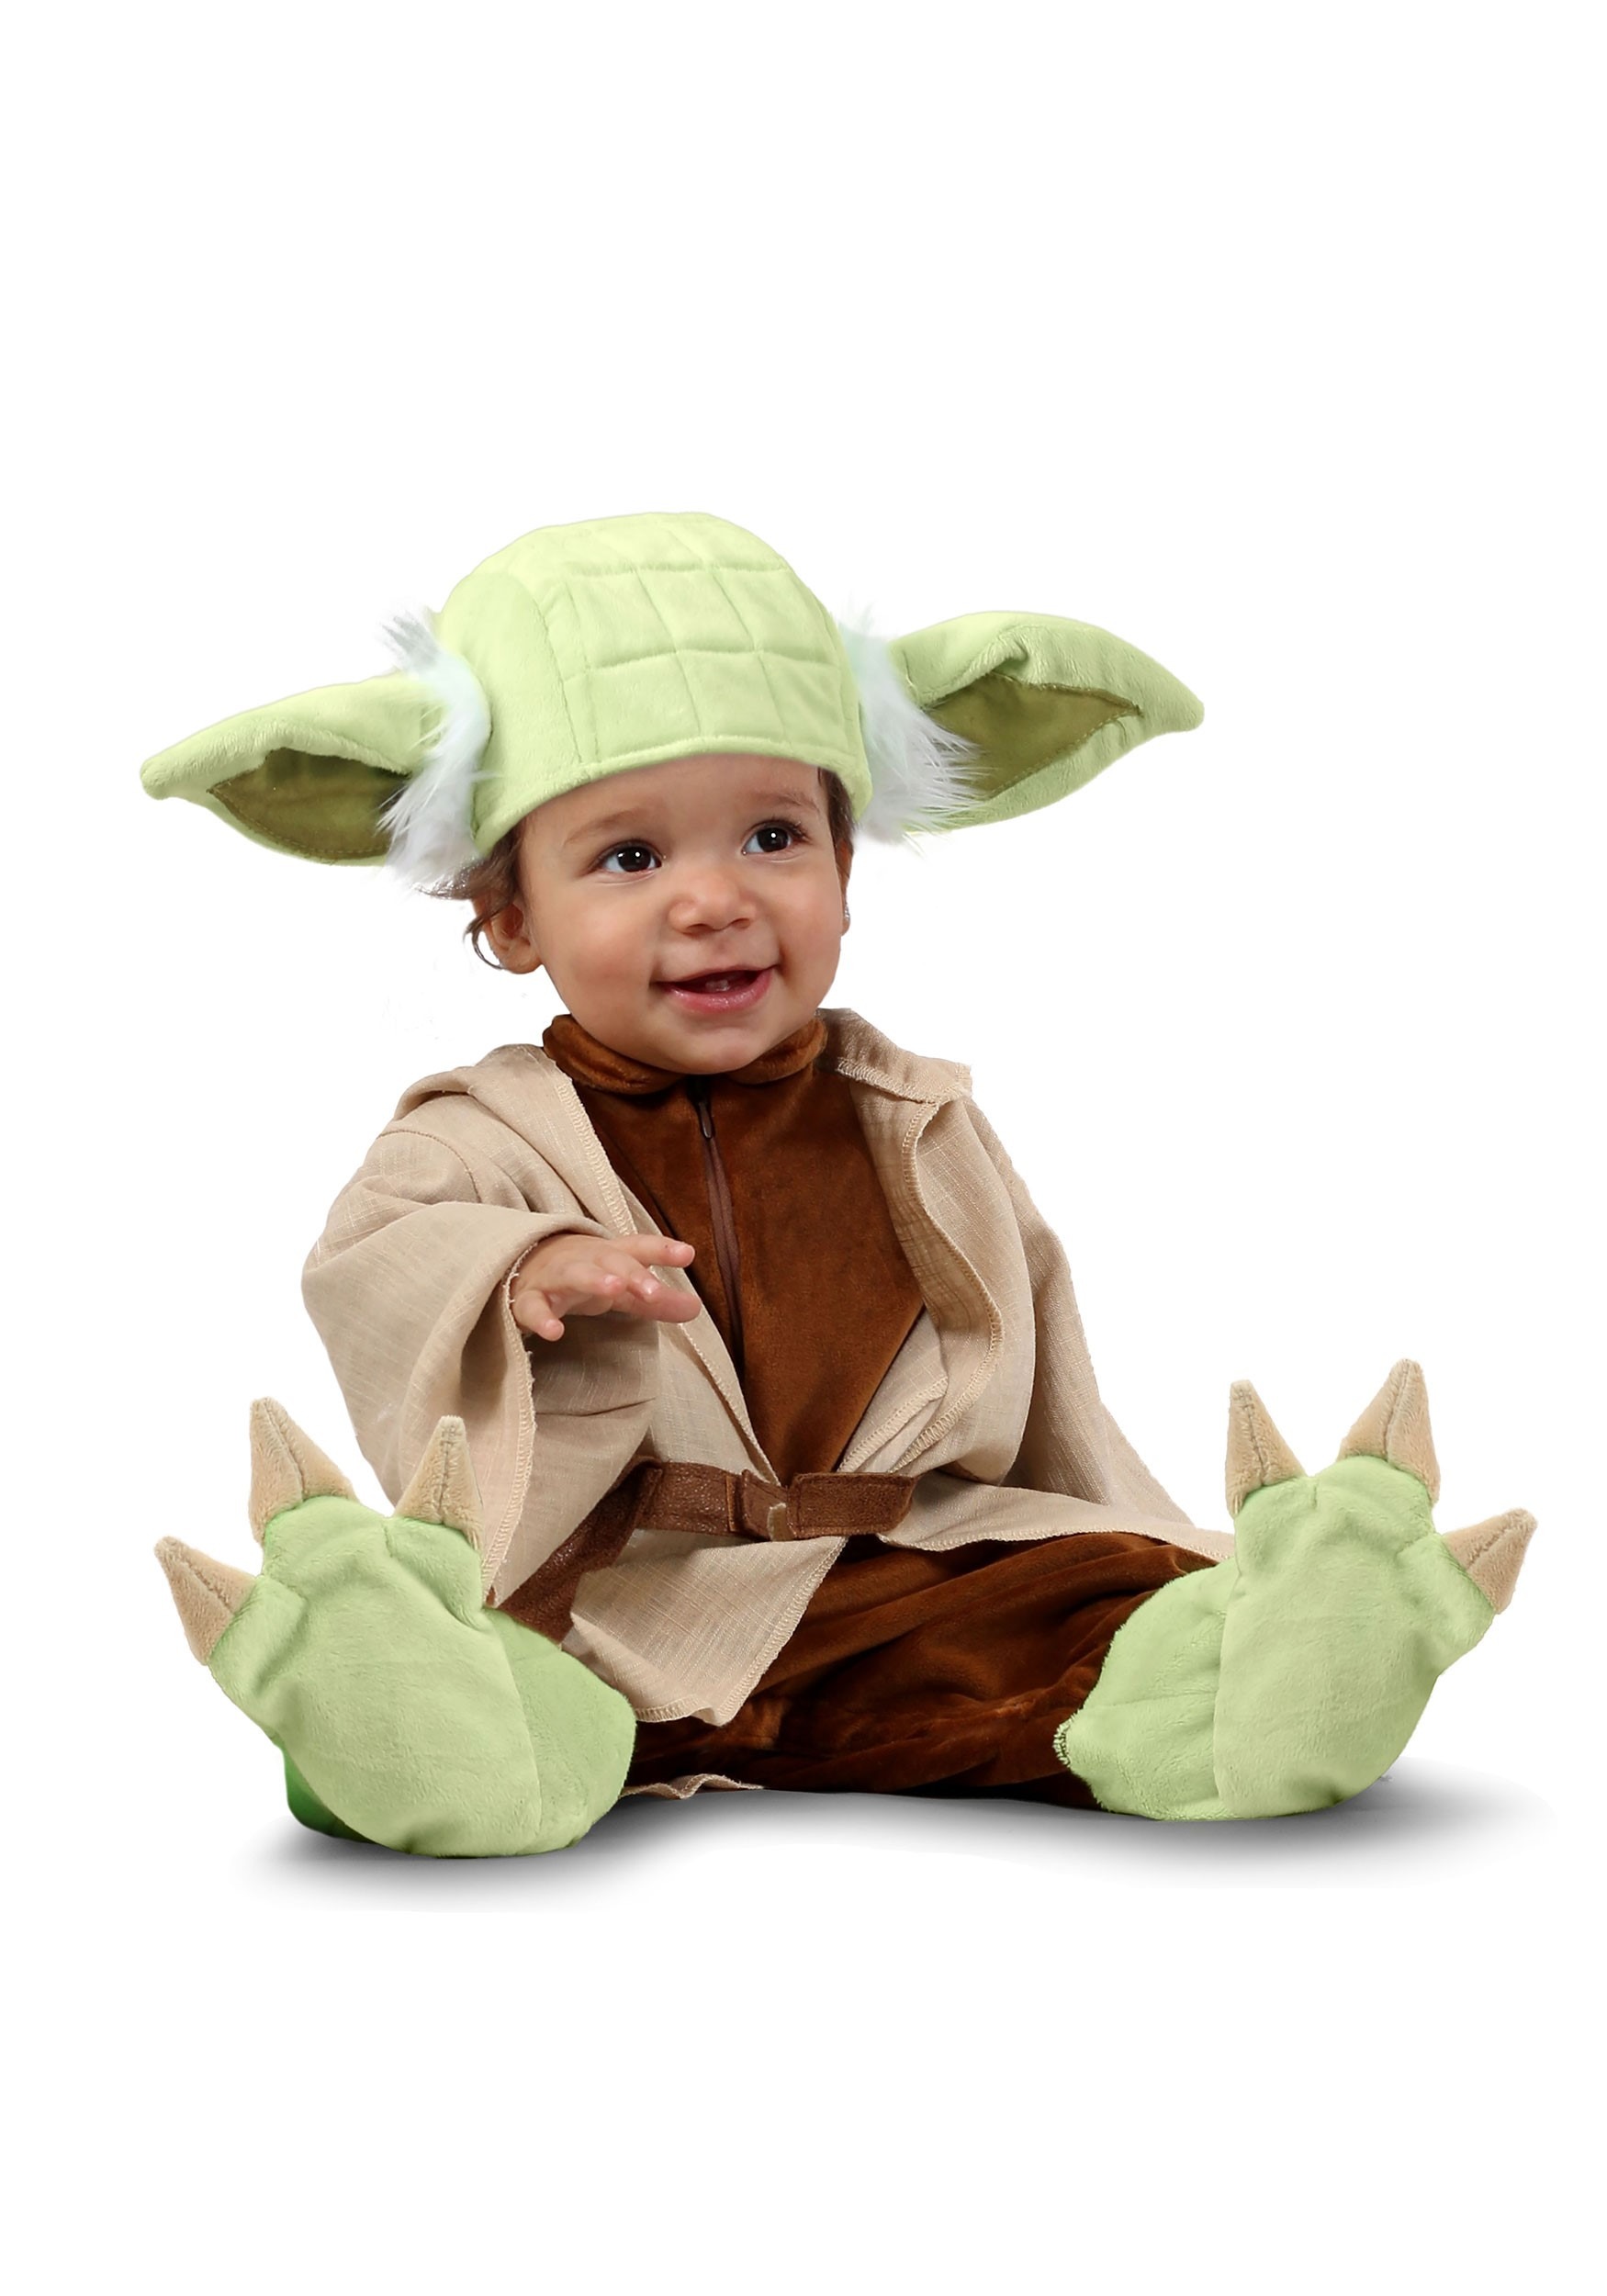 tv station Promoten tempel Star Wars Yoda Costume for Babies